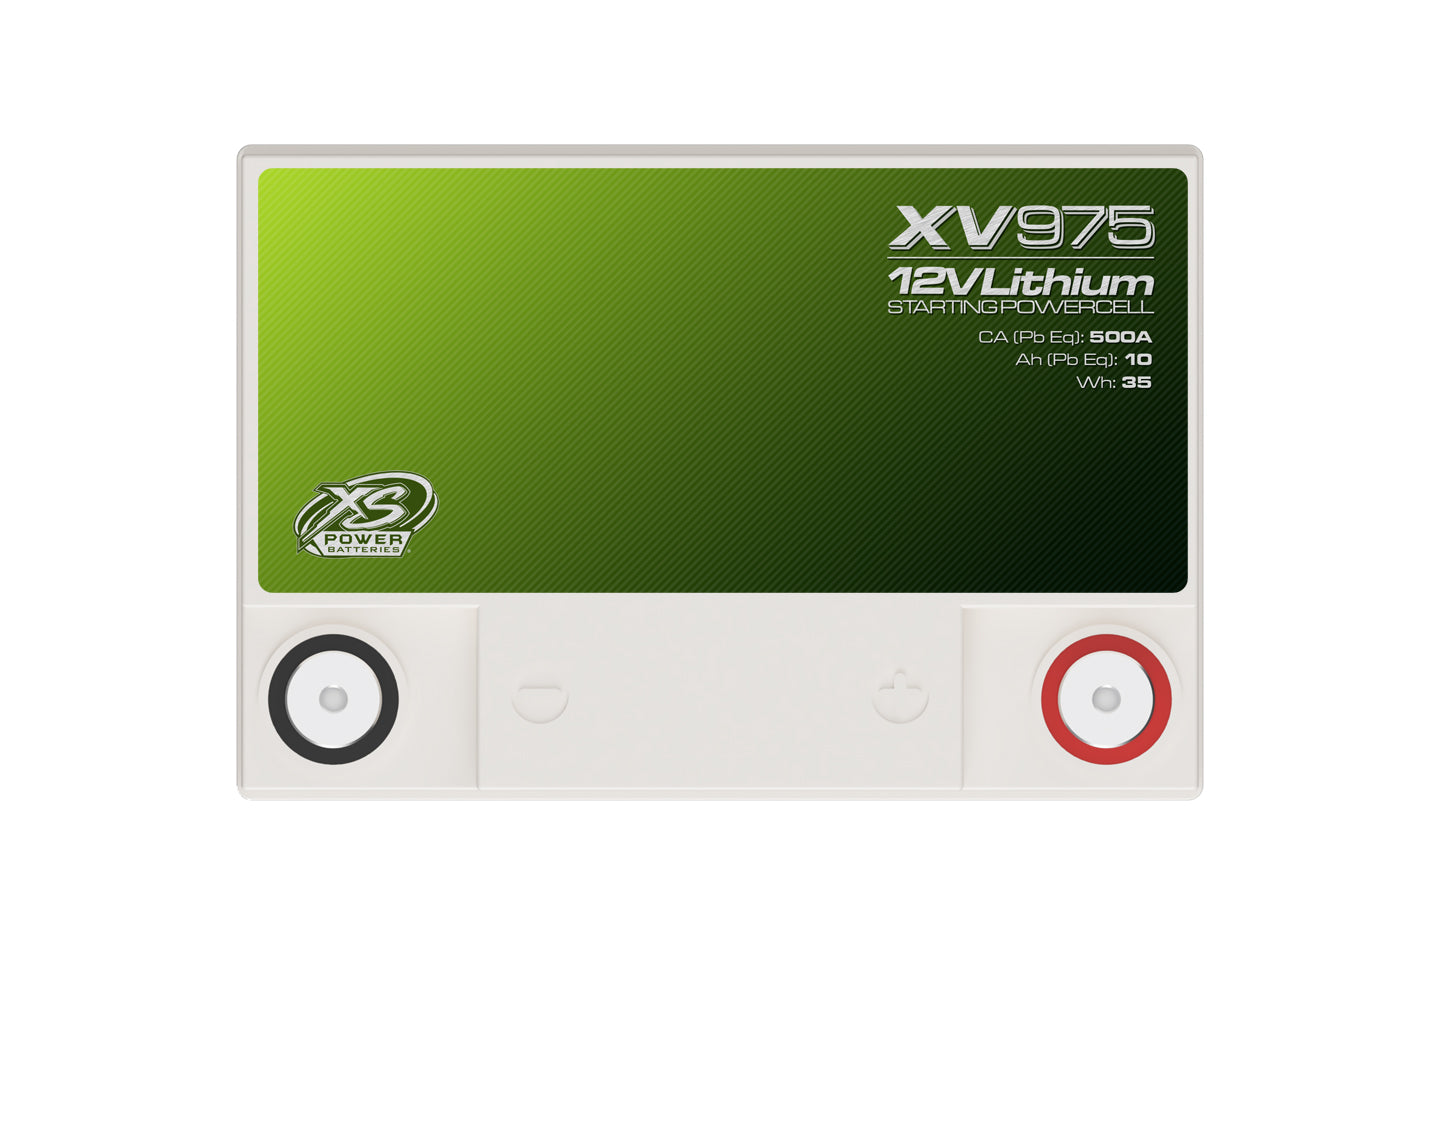 XV975 XS Power 12VDC Group U1R Lithium LTO Underhood-Safe Vehicle Battery 750W 35Wh